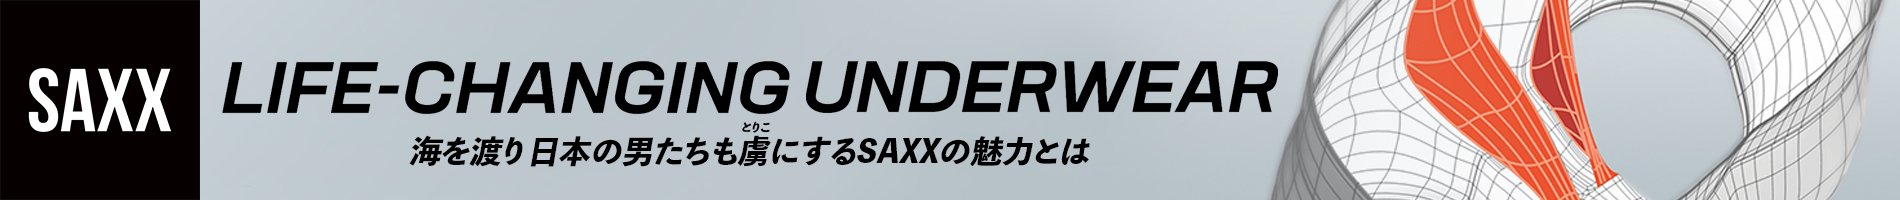 S.M.W.D / SAXX 日本総輸入販売元直営ショップ